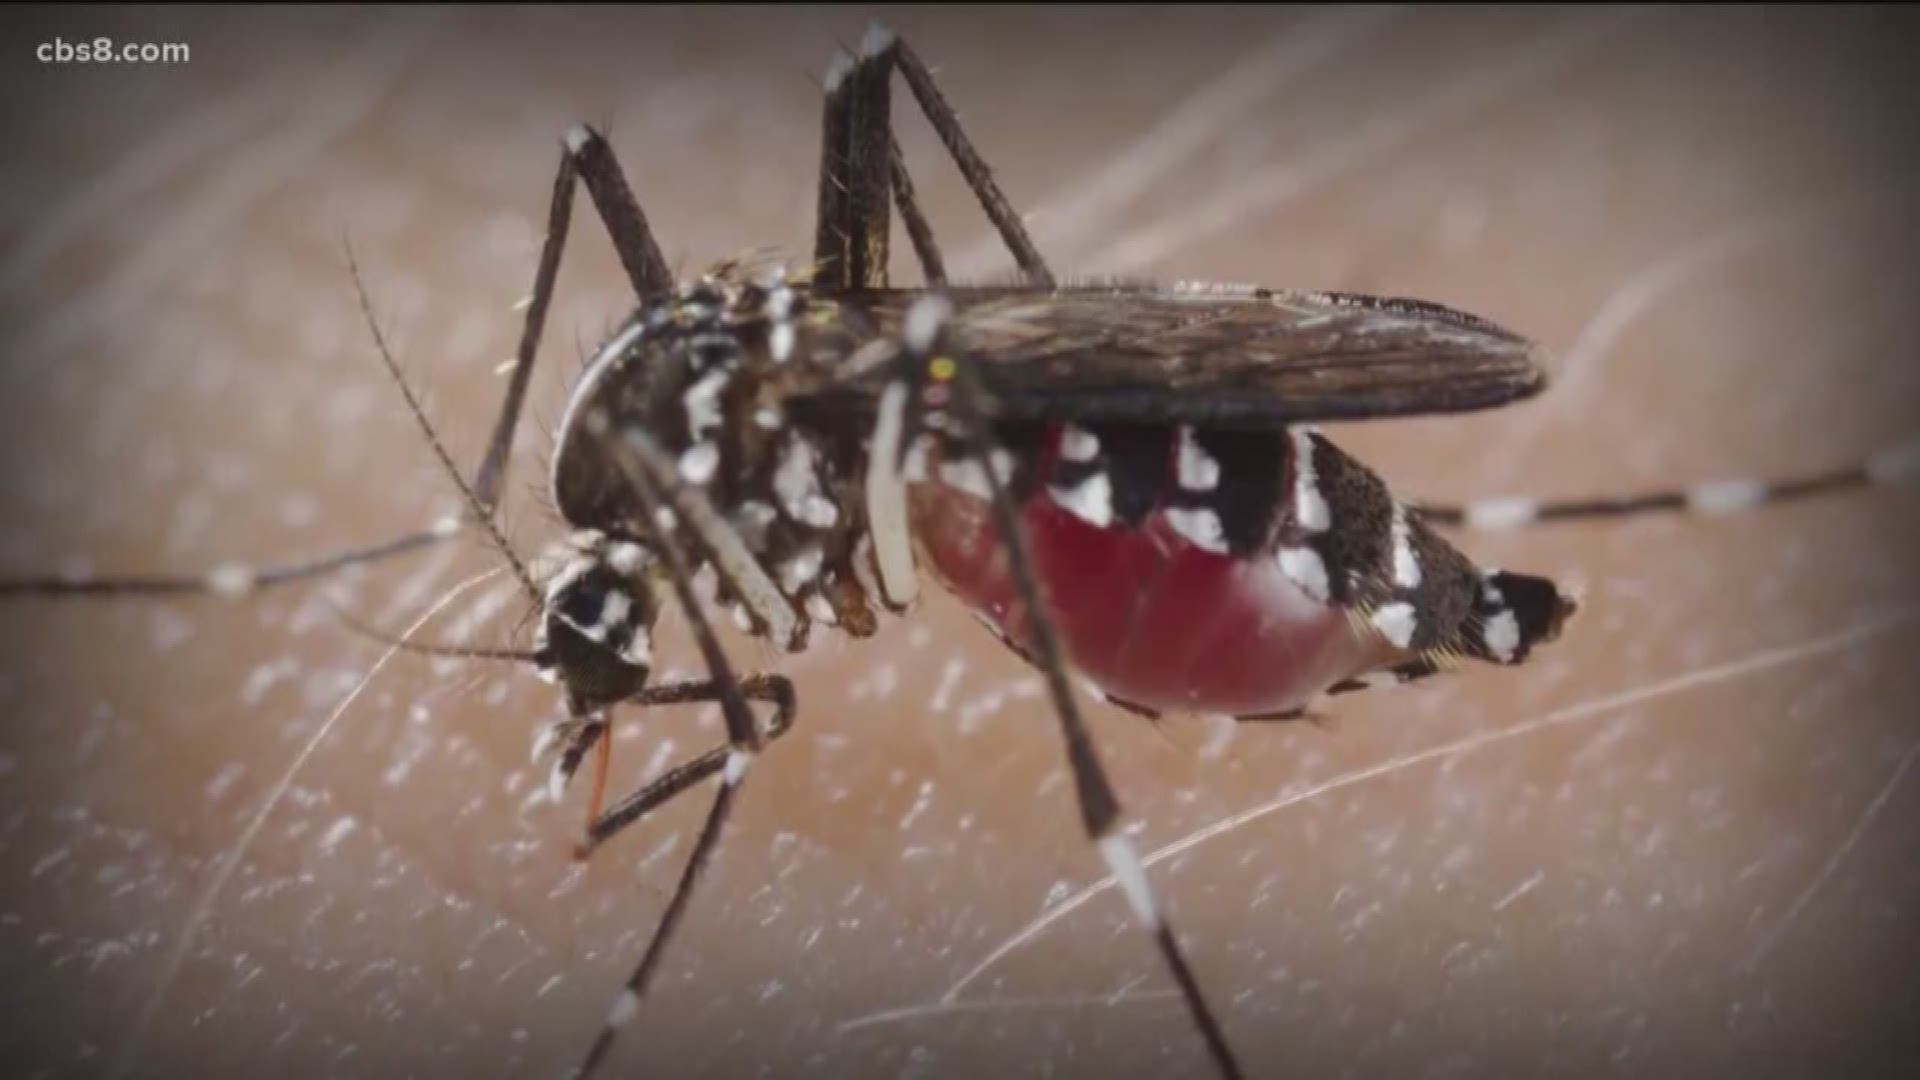 Recent rainy season could impact mosquito season.